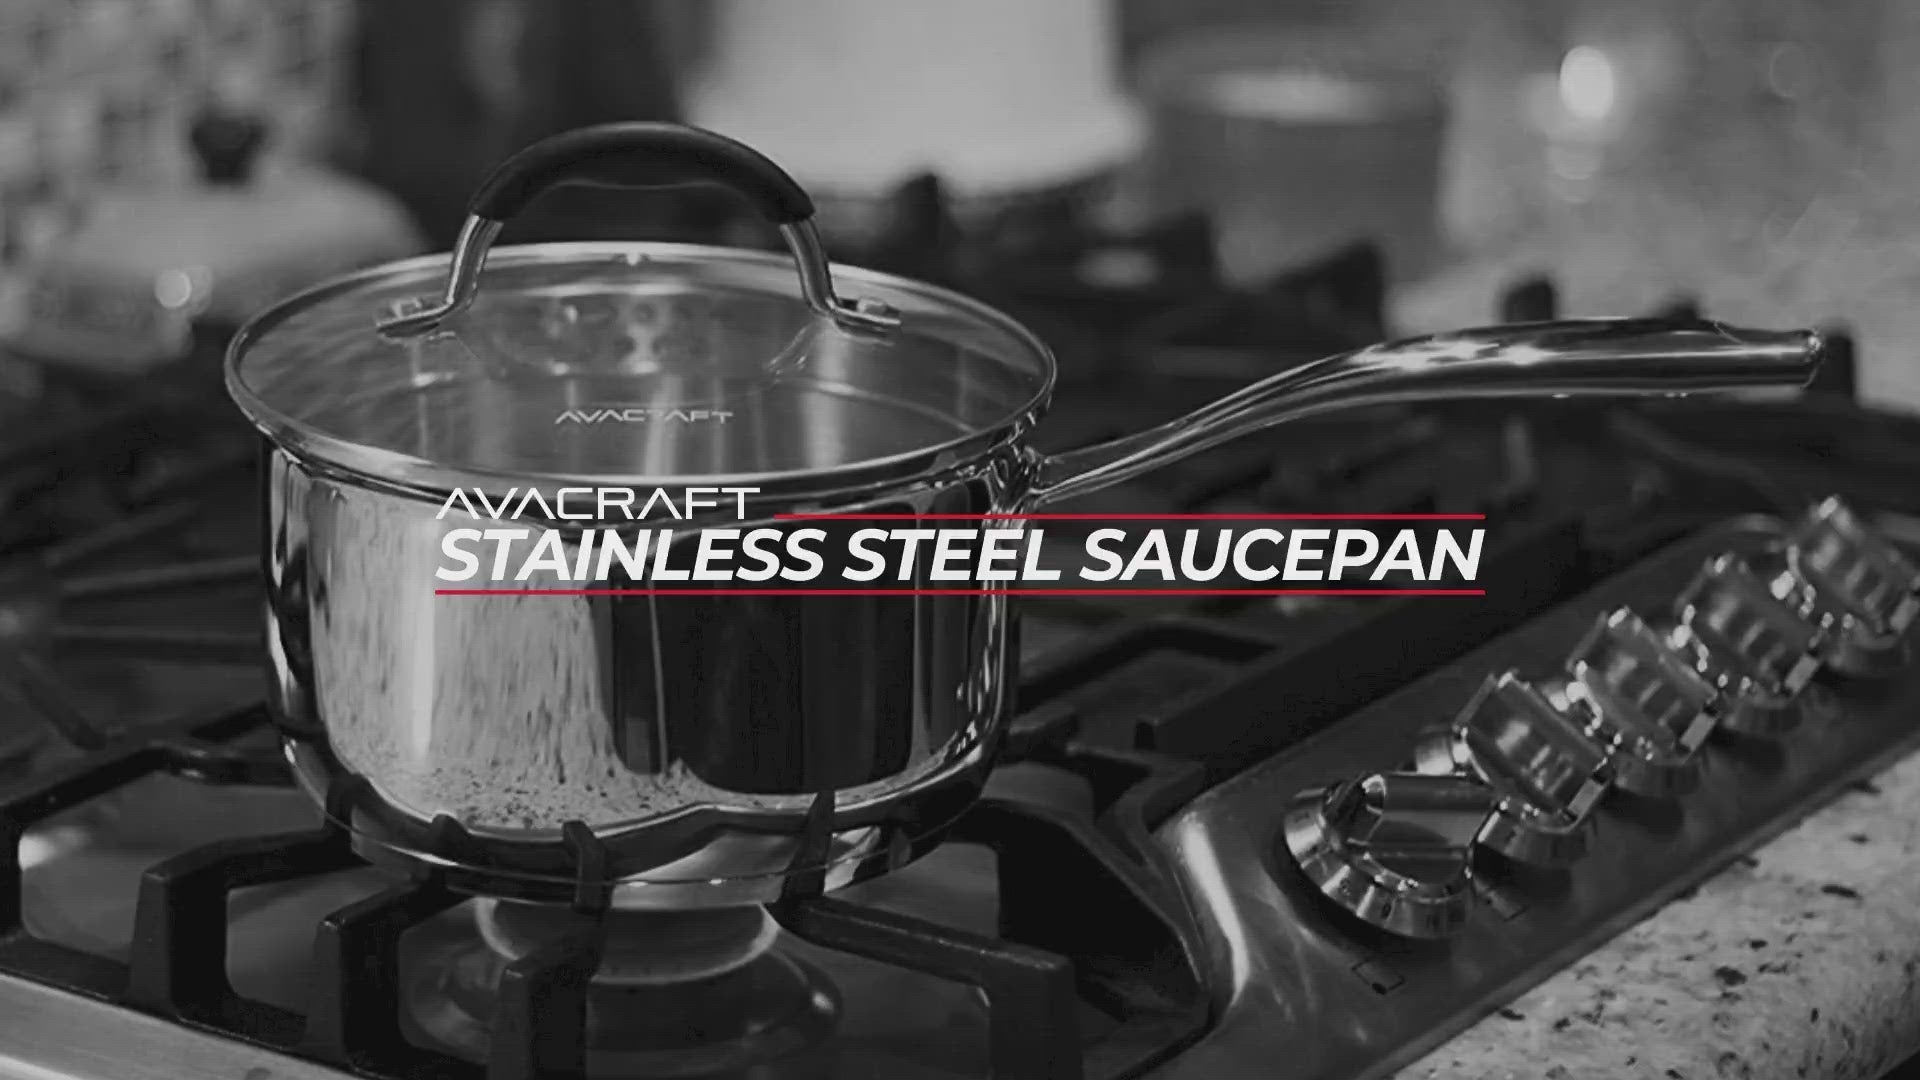 2 Quart Saucepan with Lid, Tri Ply Stainless Steel Sauce Pan, 2 Qt Sauce Pan